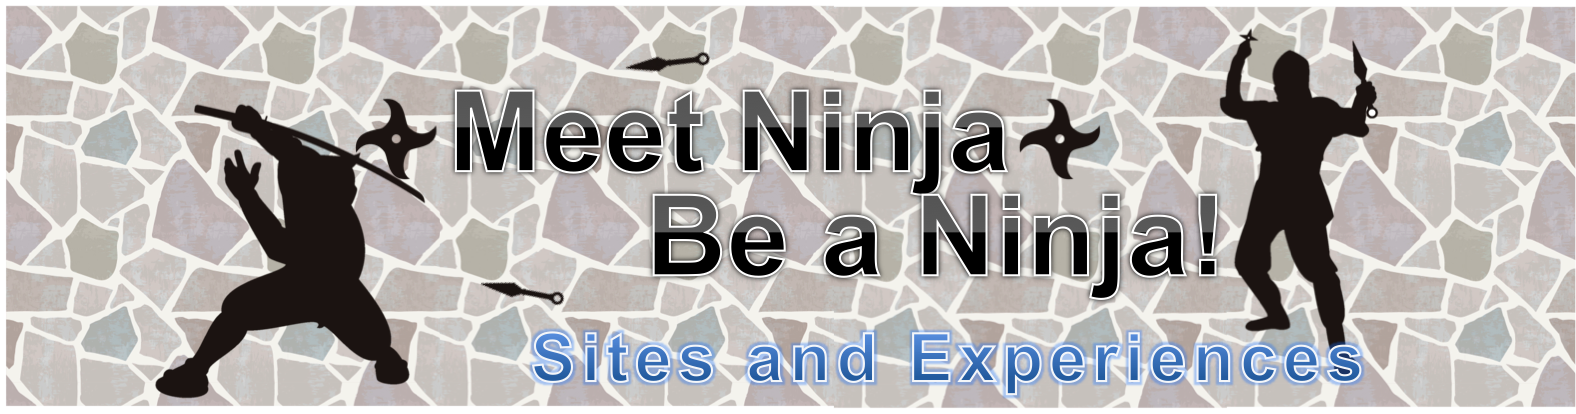 Meet Ninja, Be a Ninja! Sites and Experiences